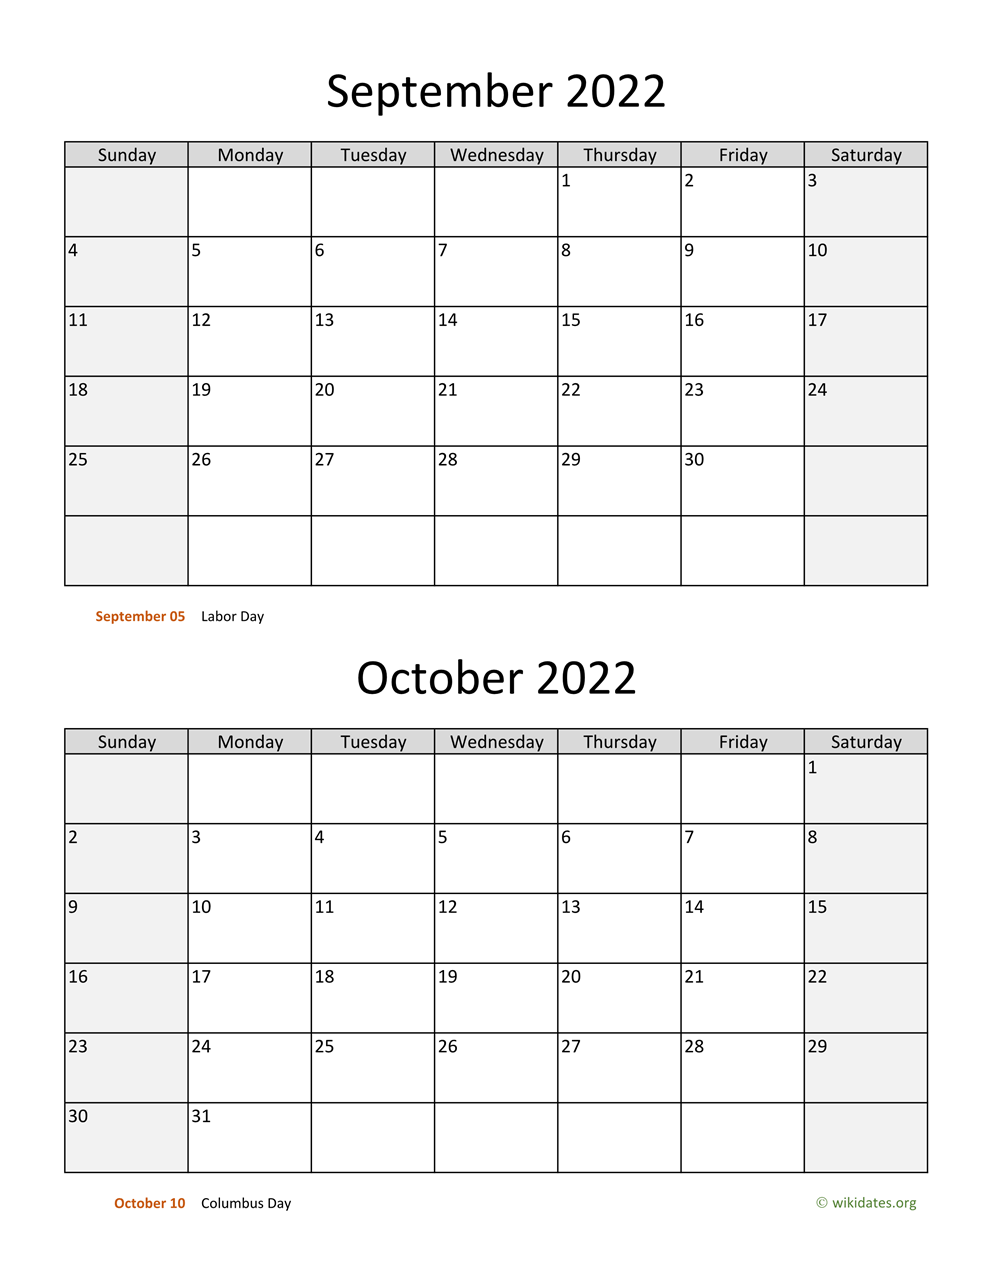 Ocotber 2022 Calendar September And October 2022 Calendar | Wikidates.org